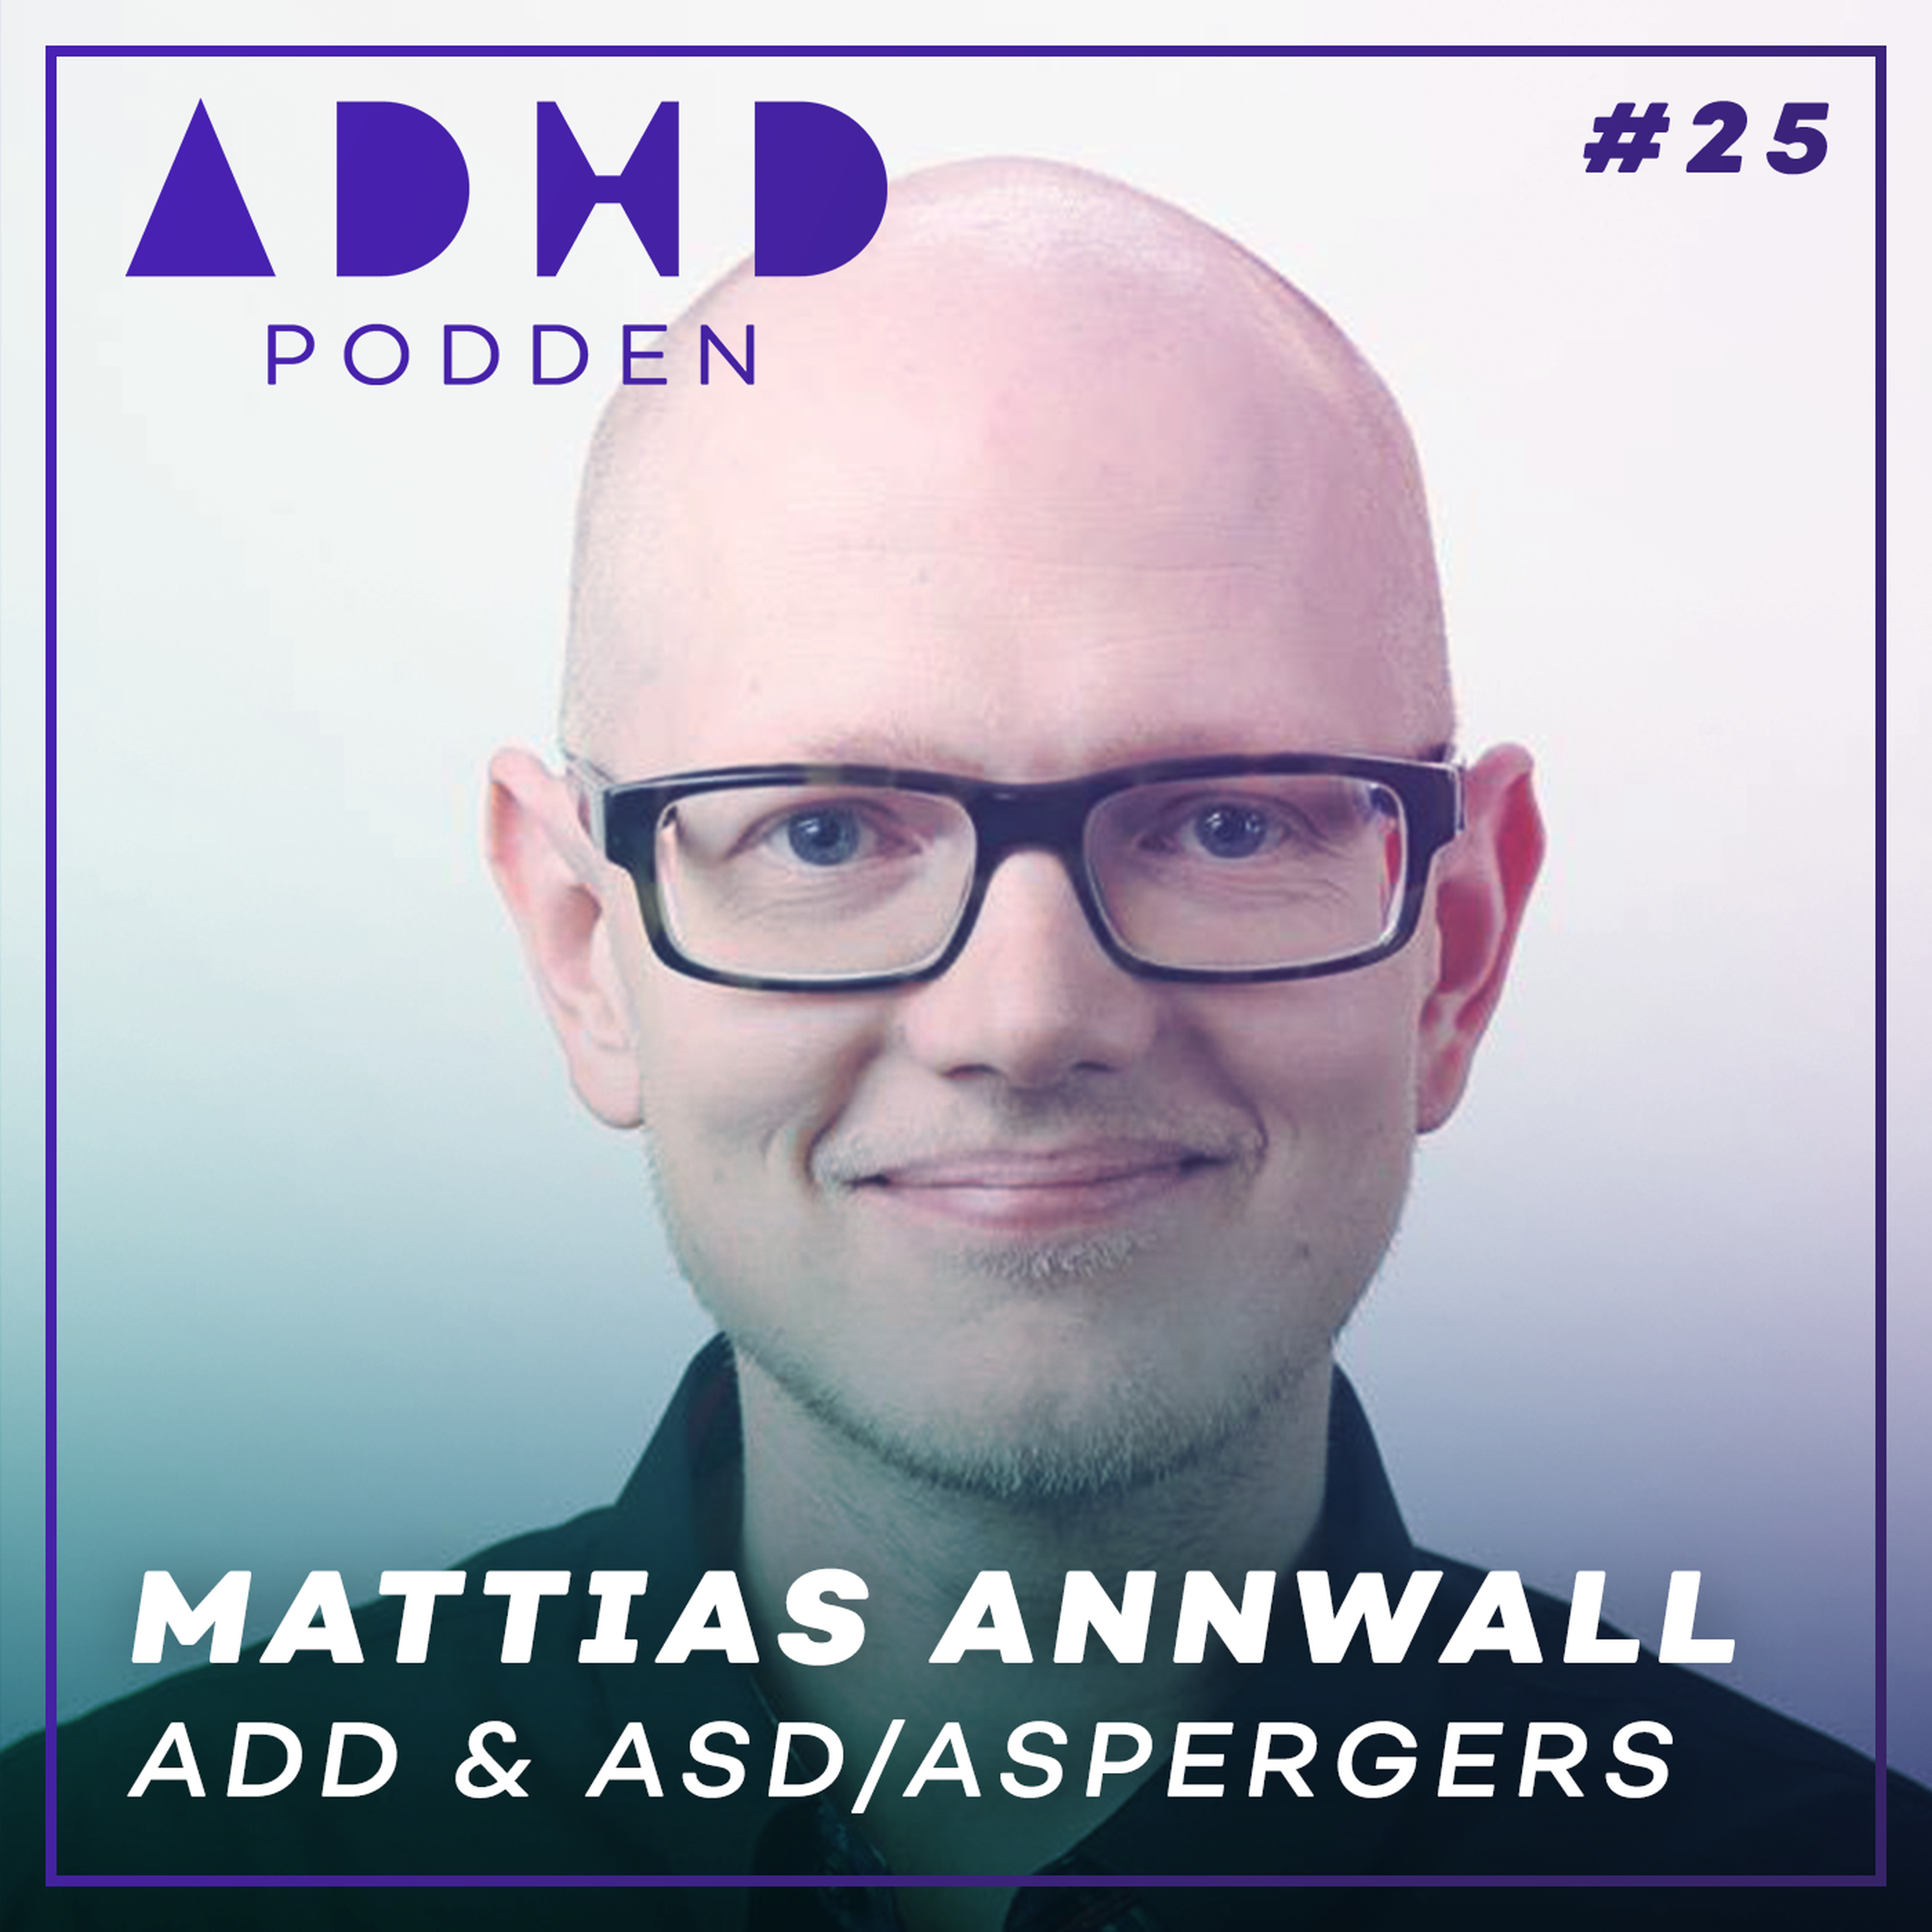 #25. OM ADD & ASD/ASPERGERS med MATTIAS ANNWALL